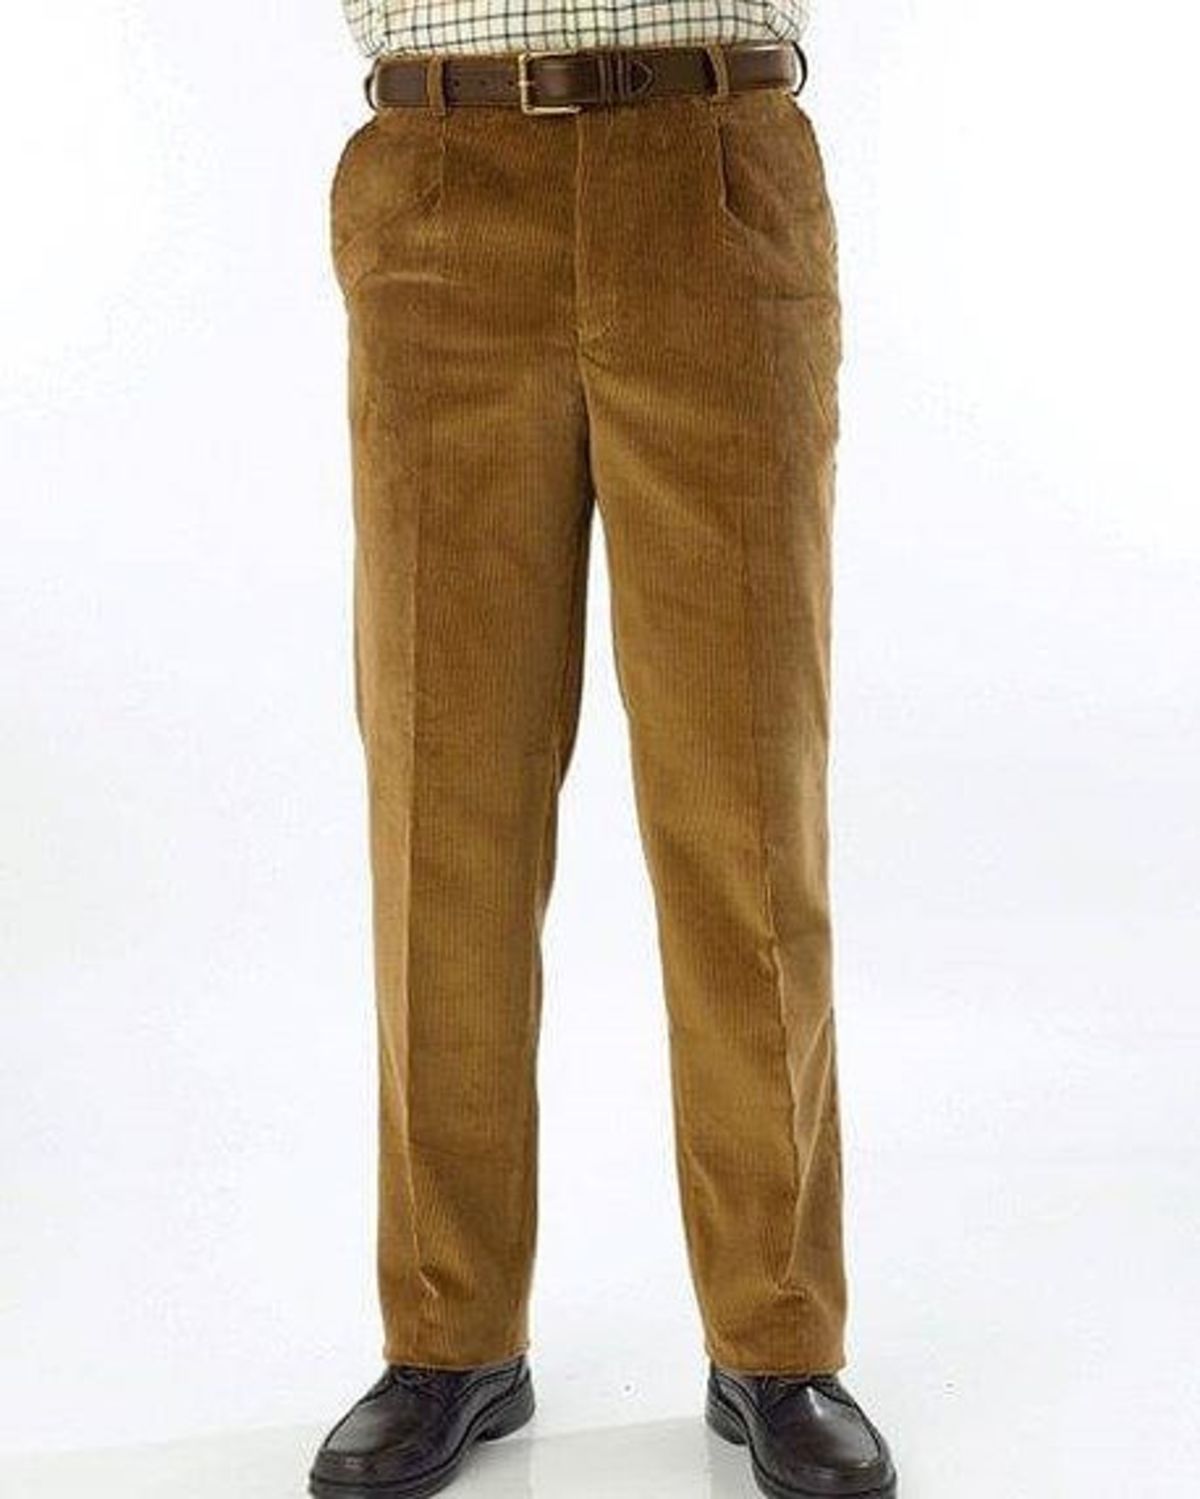 Corduroy Trousers  Mens Corduroy Trousers and Pants UK  Tweed Jackets UK